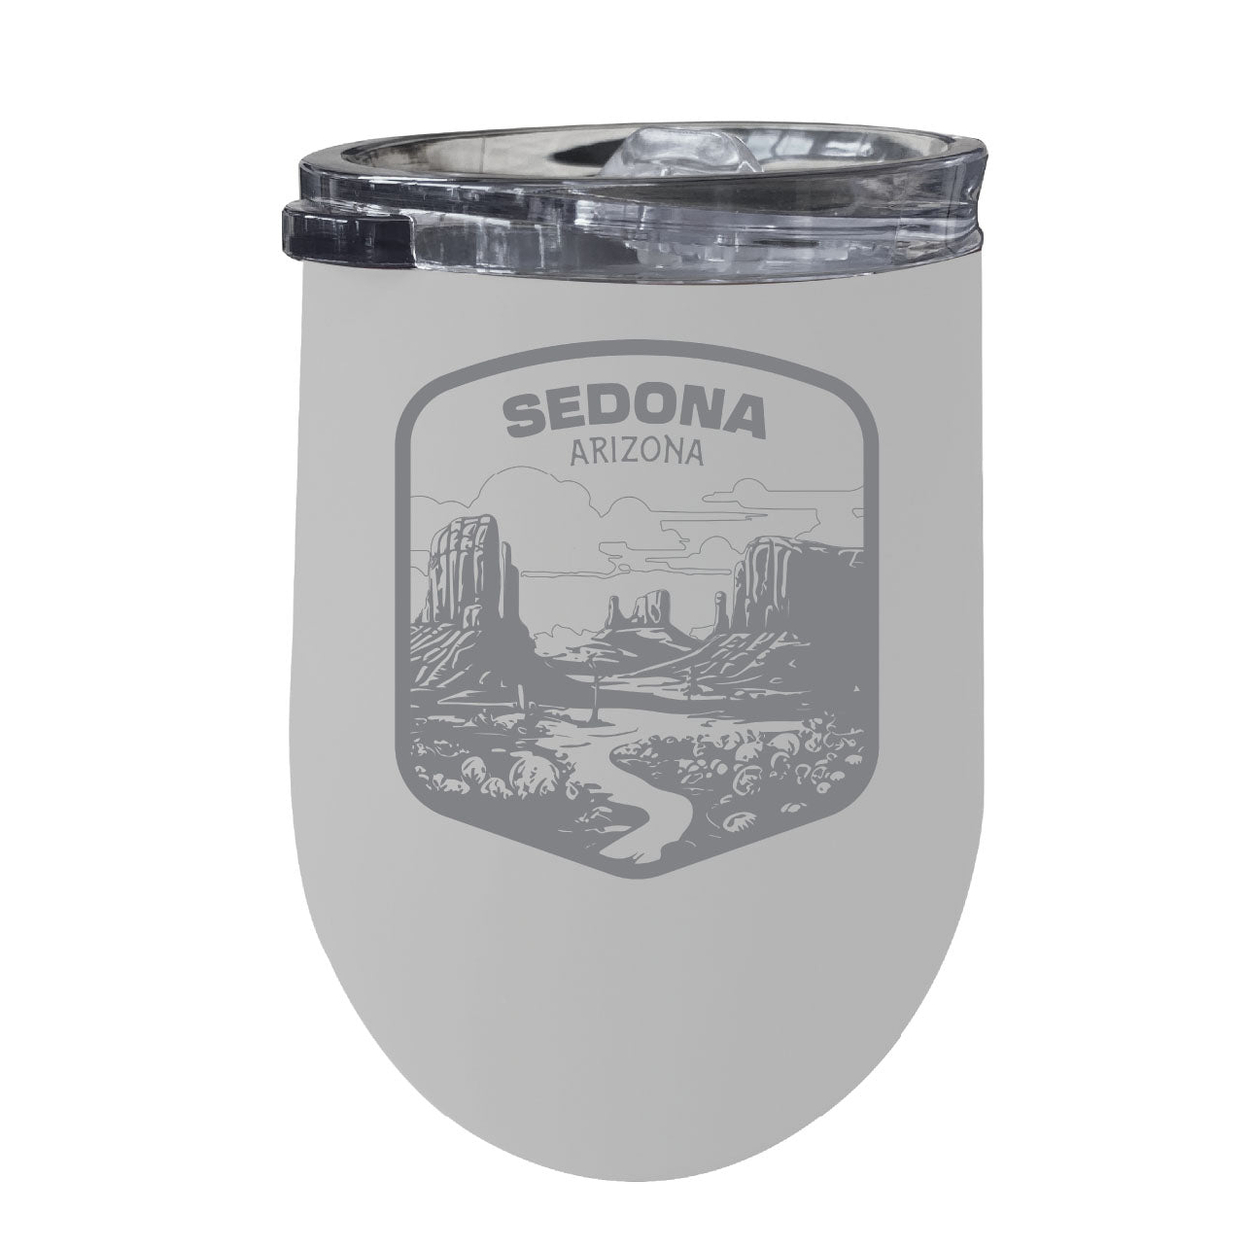 Sedona Arizona Souvenir 12 Oz Engraved Insulated Wine Stainless Steel Tumbler - Rose Gold,,2-Pack